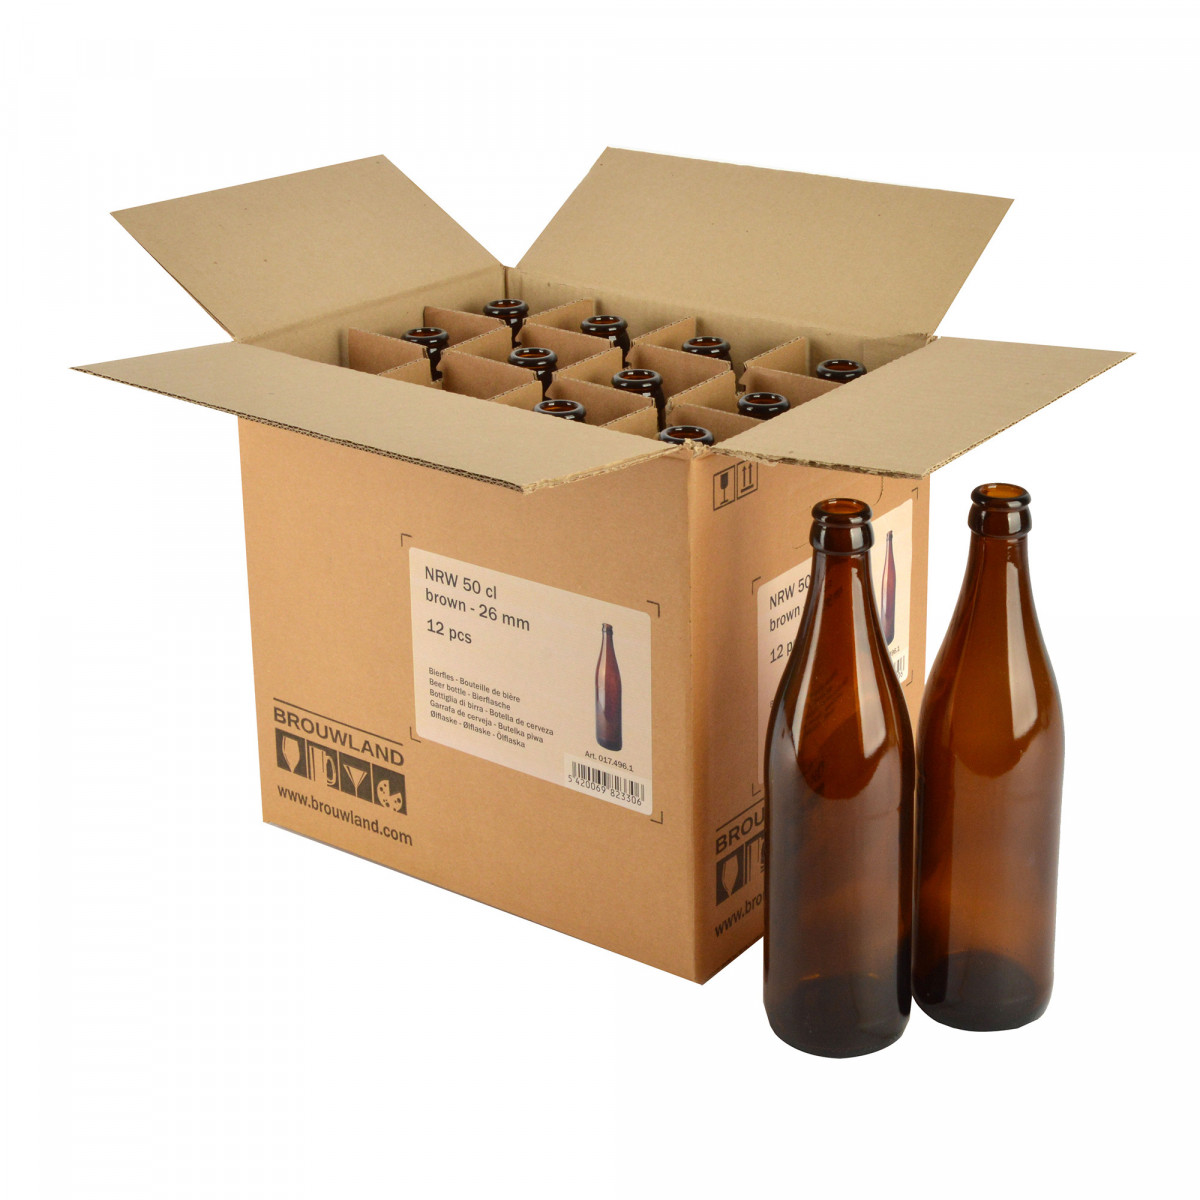 Beer bottle NRW 50 cl, brown, 26 mm, box 12 pcs • Brouwland